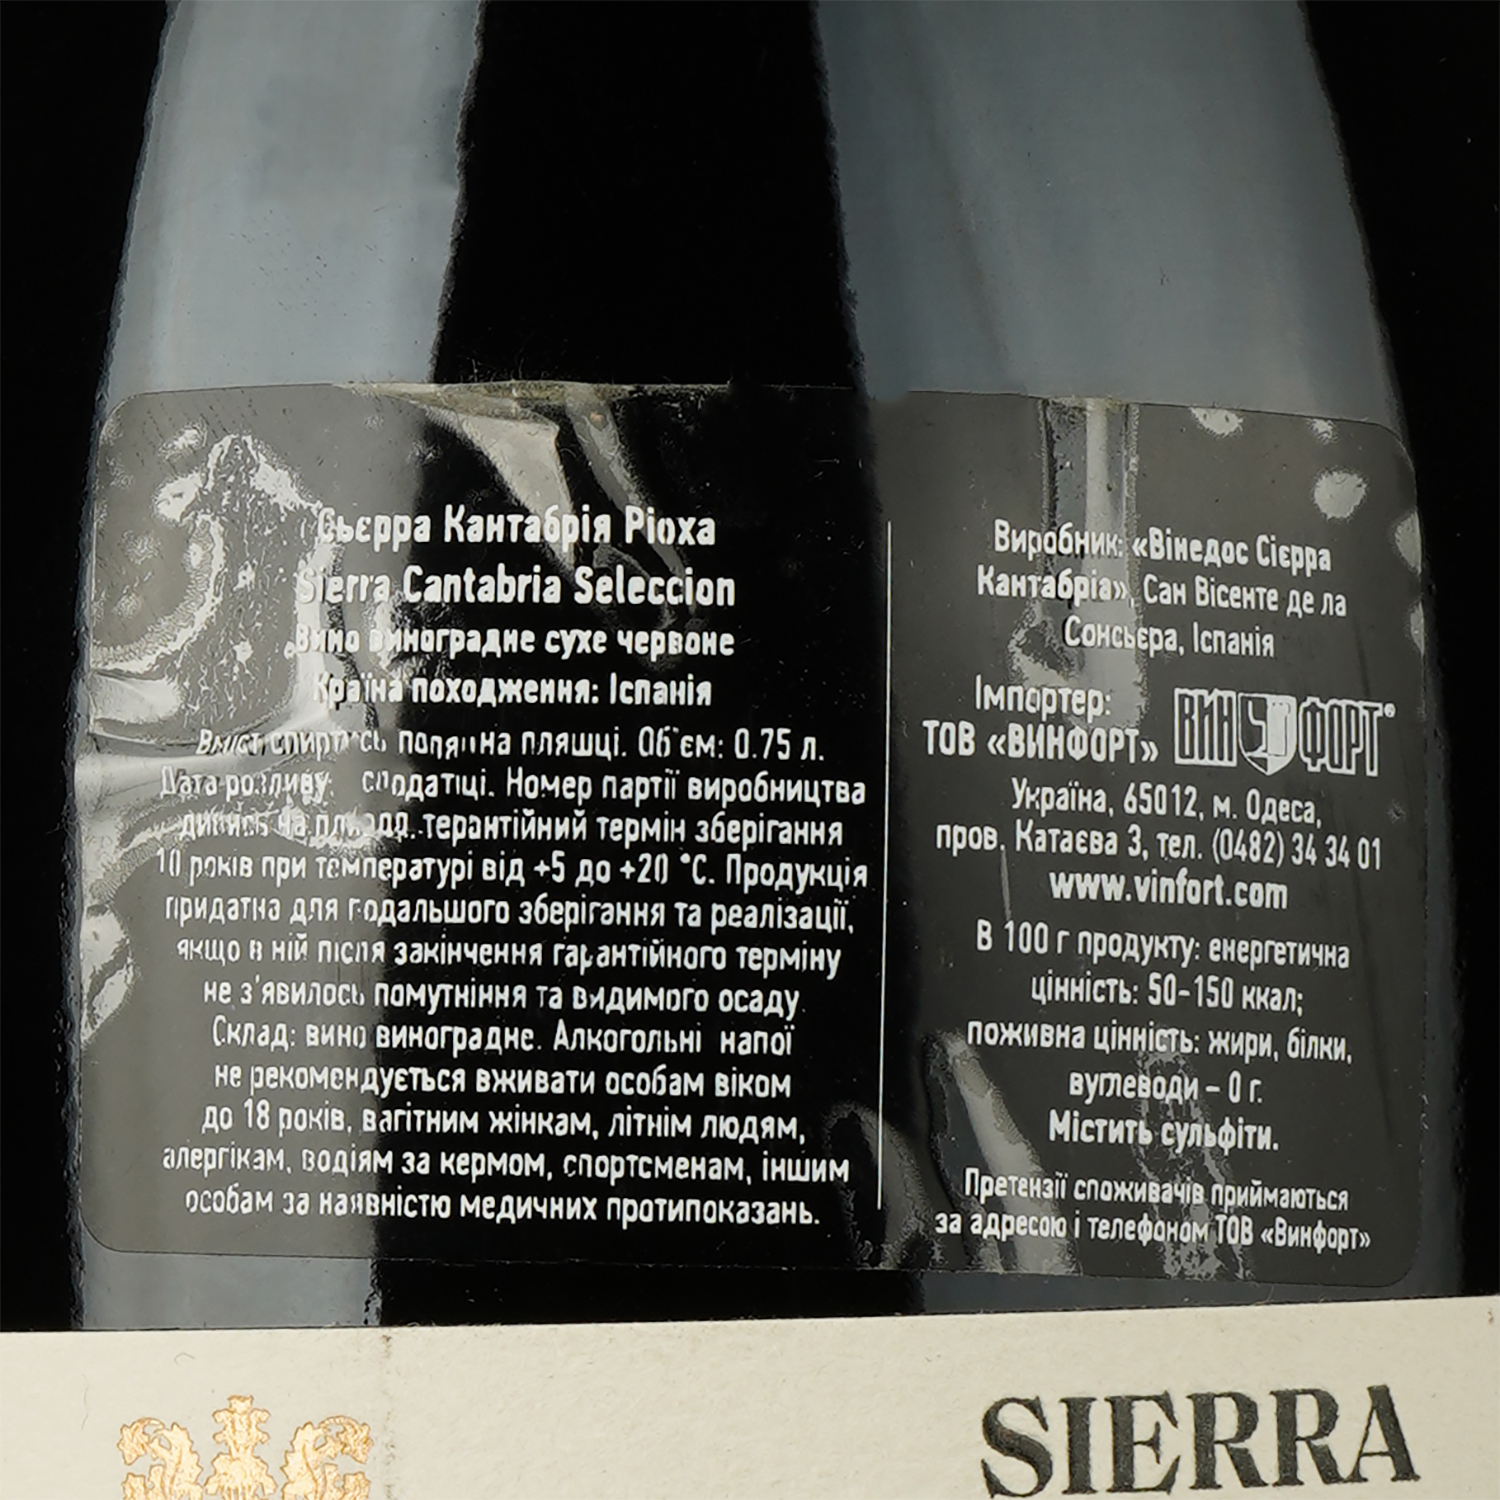 Вино Sierra Cantabria Rioja, красное, сухое, 13,5%, 0,75 л - фото 3